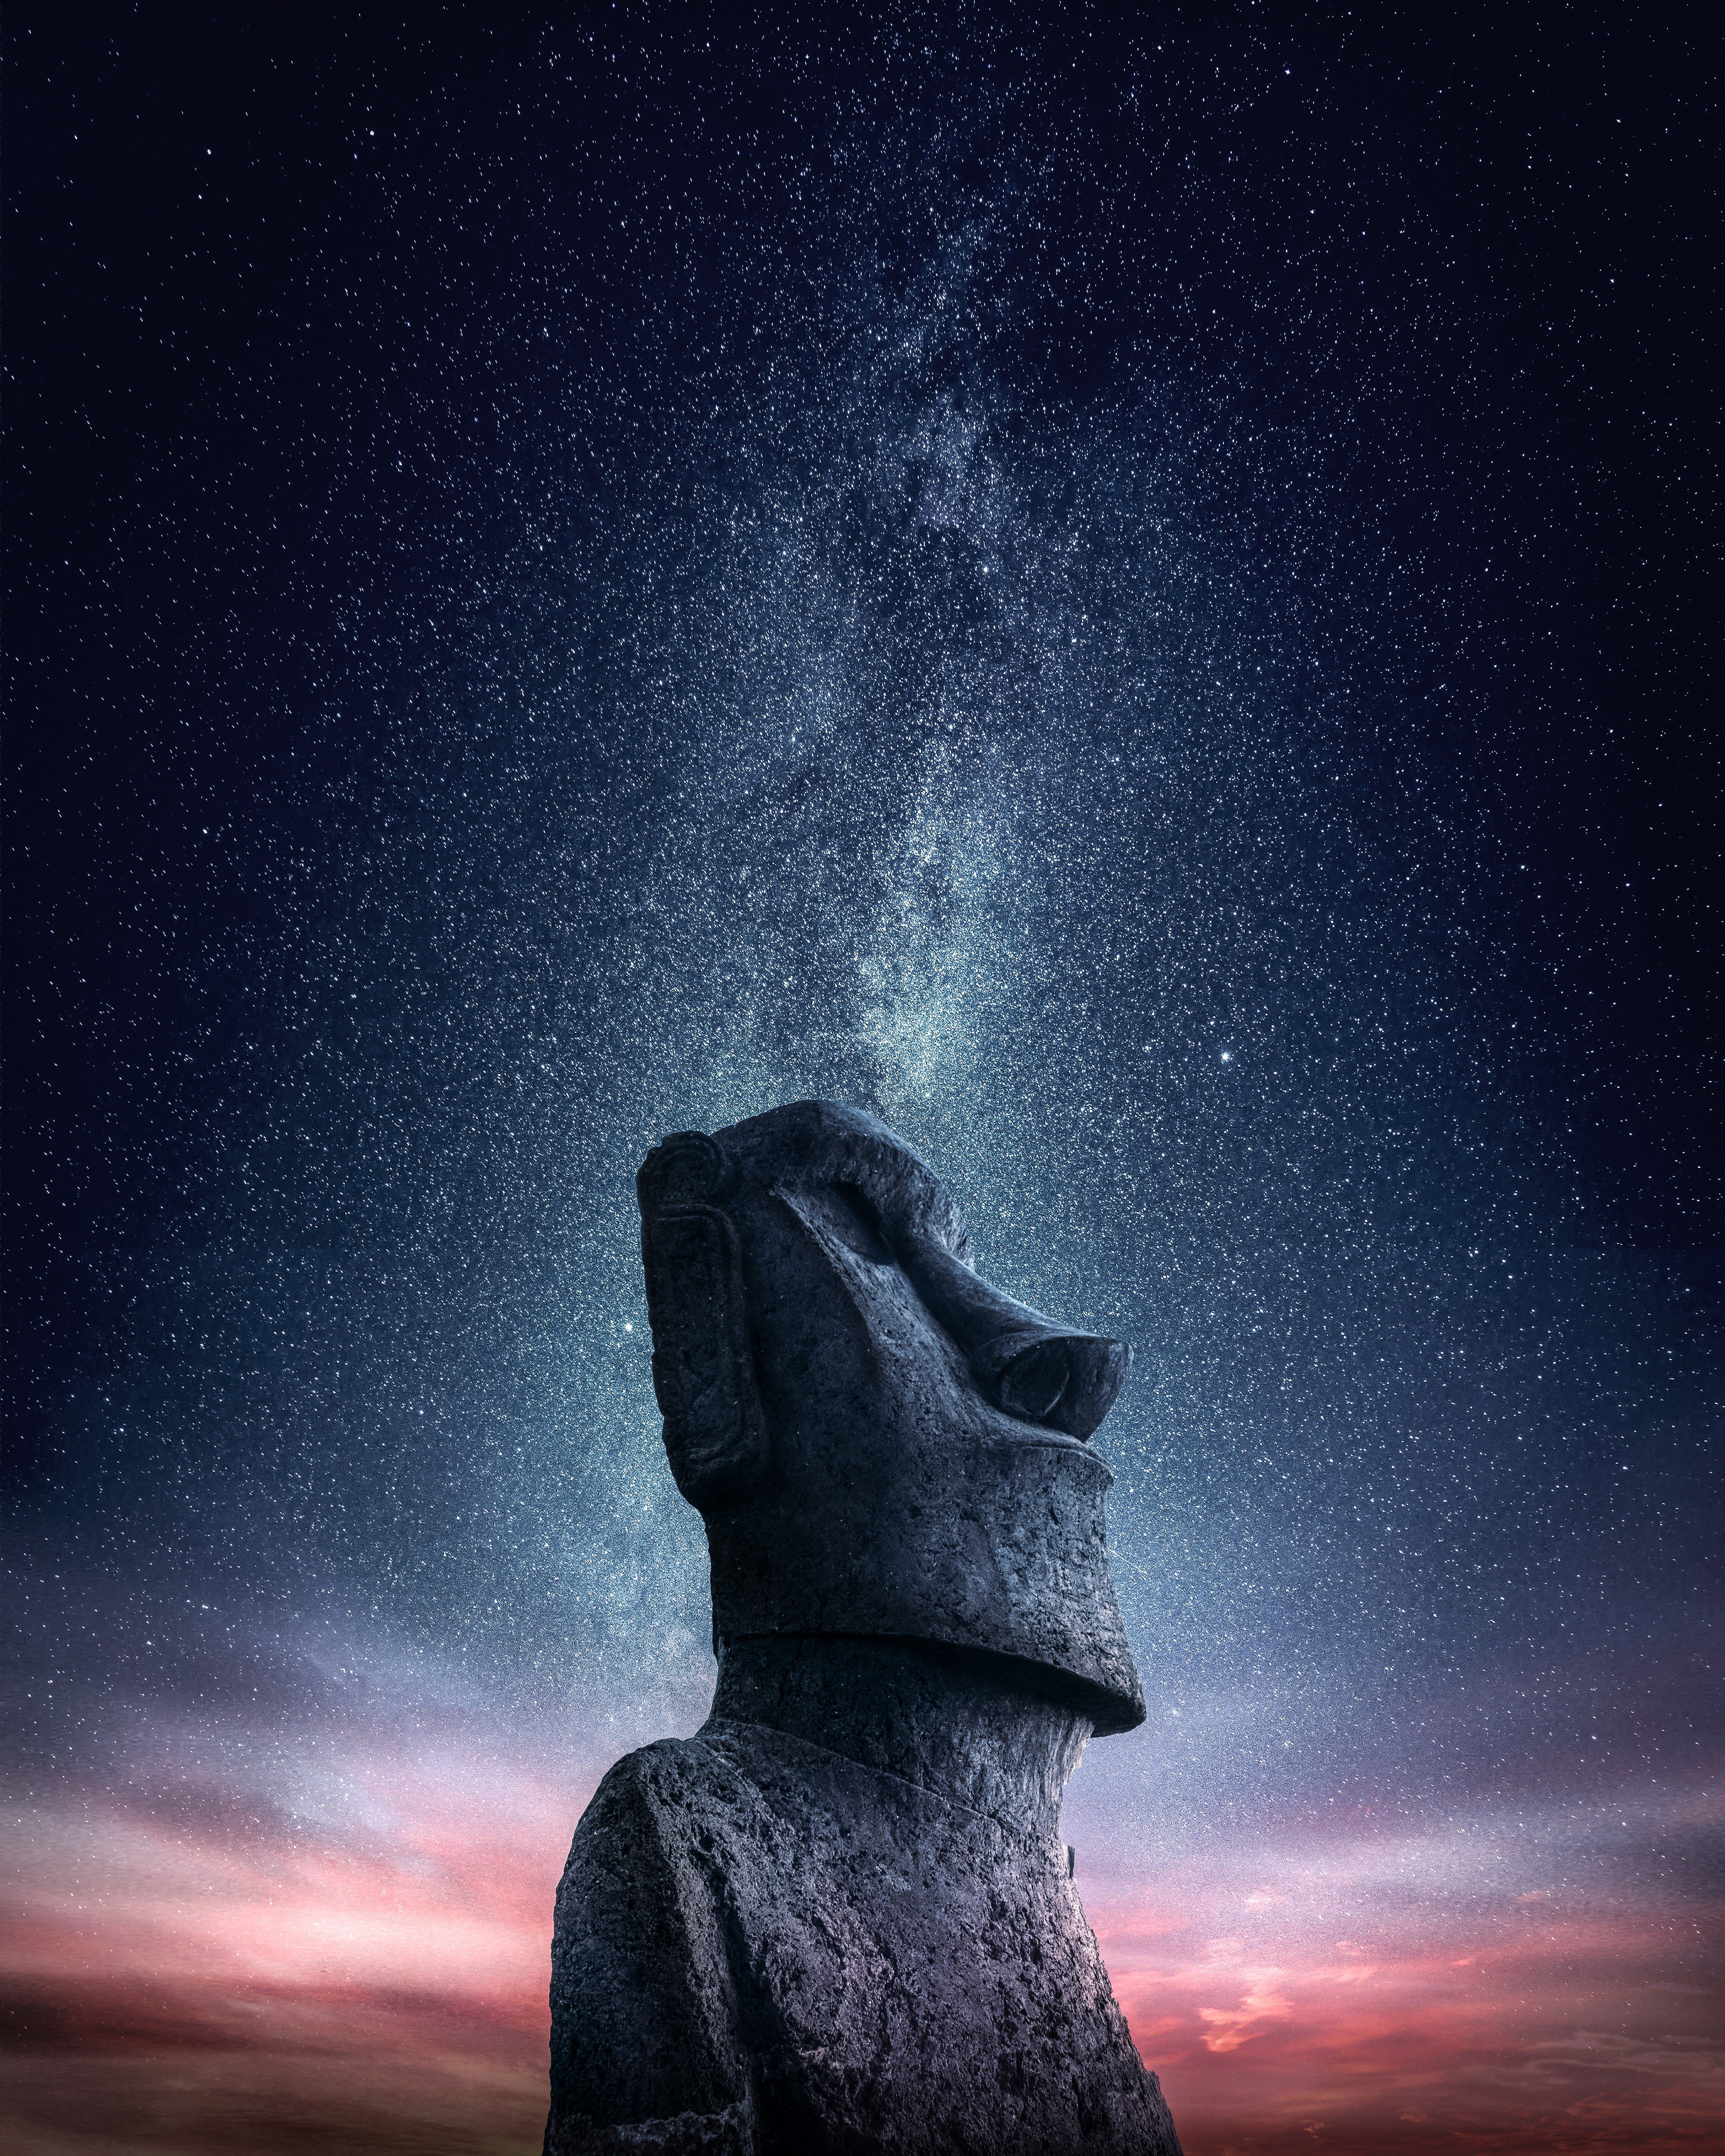 easter straits, miscellaneous, moai, miscellanea, starry sky, statue, idol, easter strow